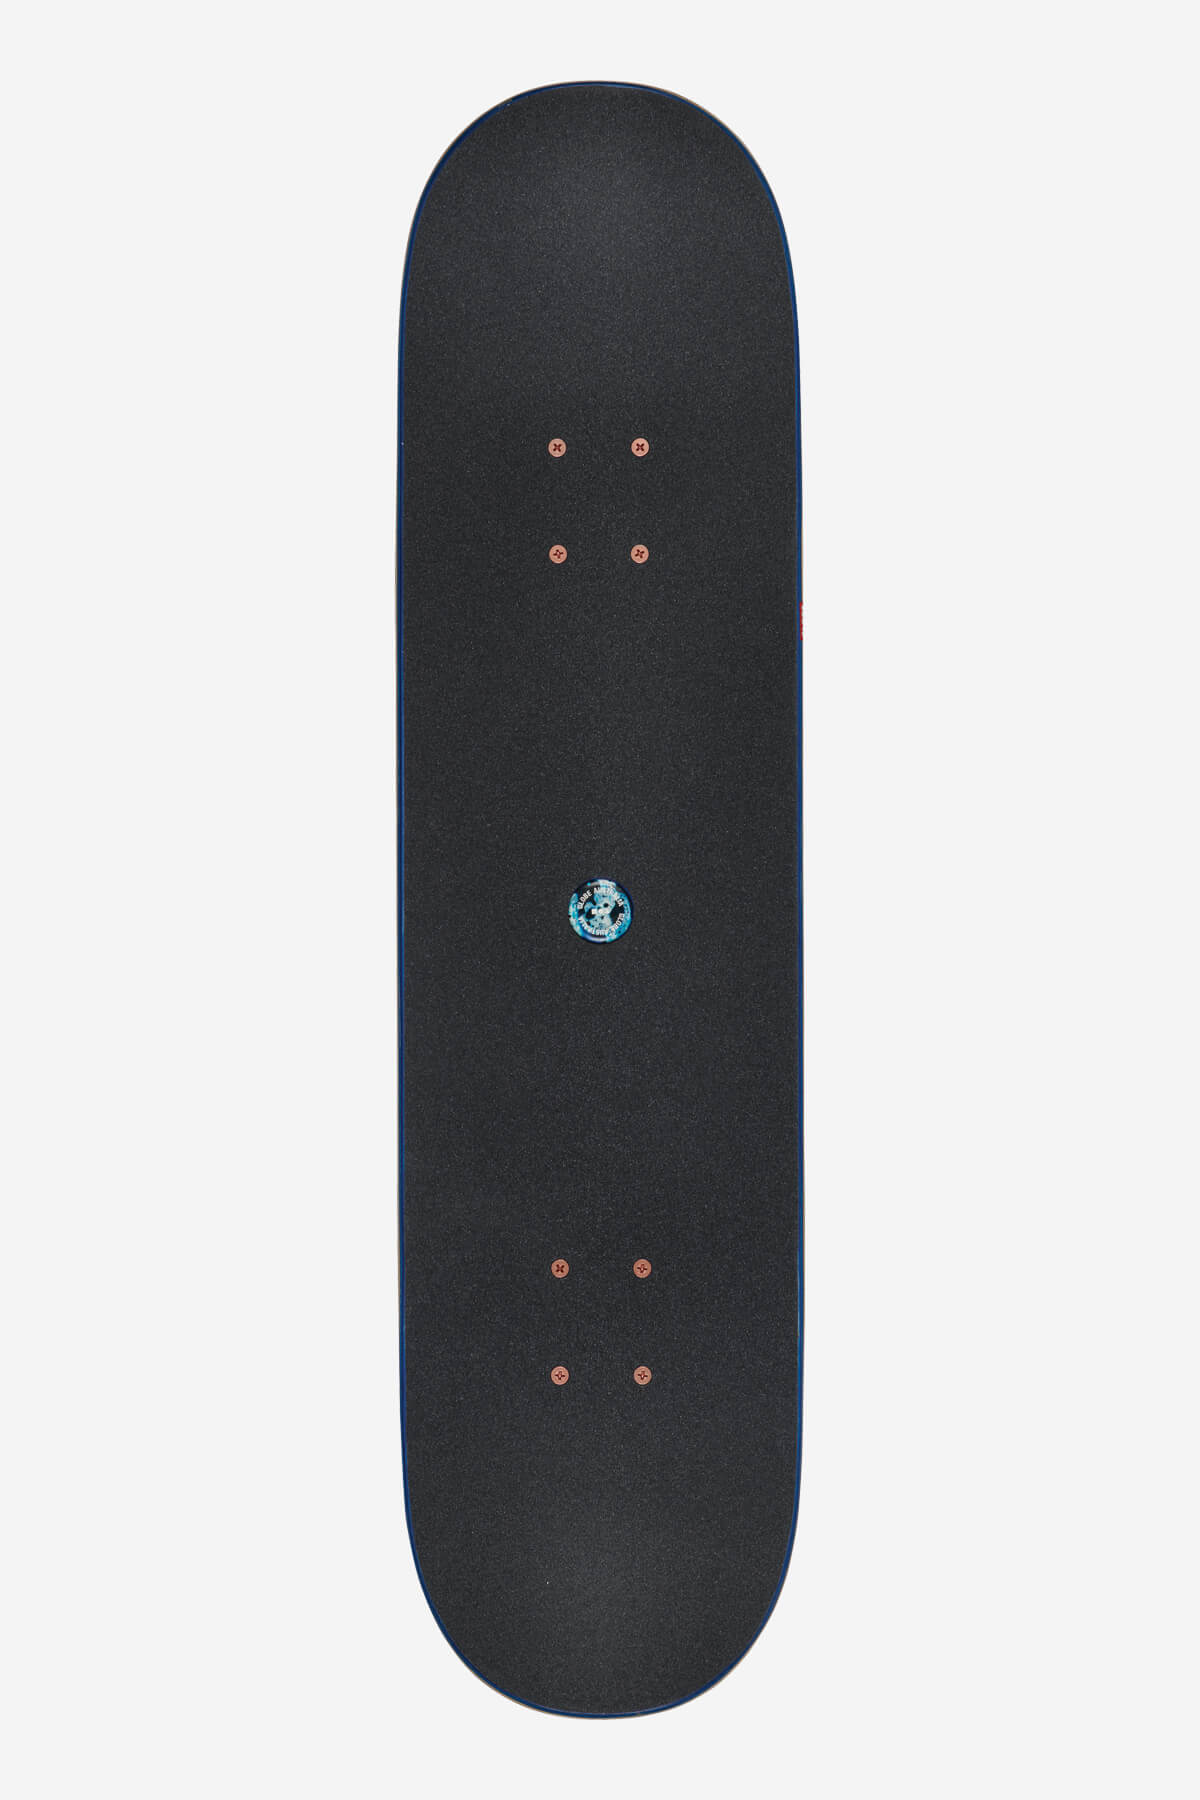 g2 rholtsu scorps 8.0" complete skateboard